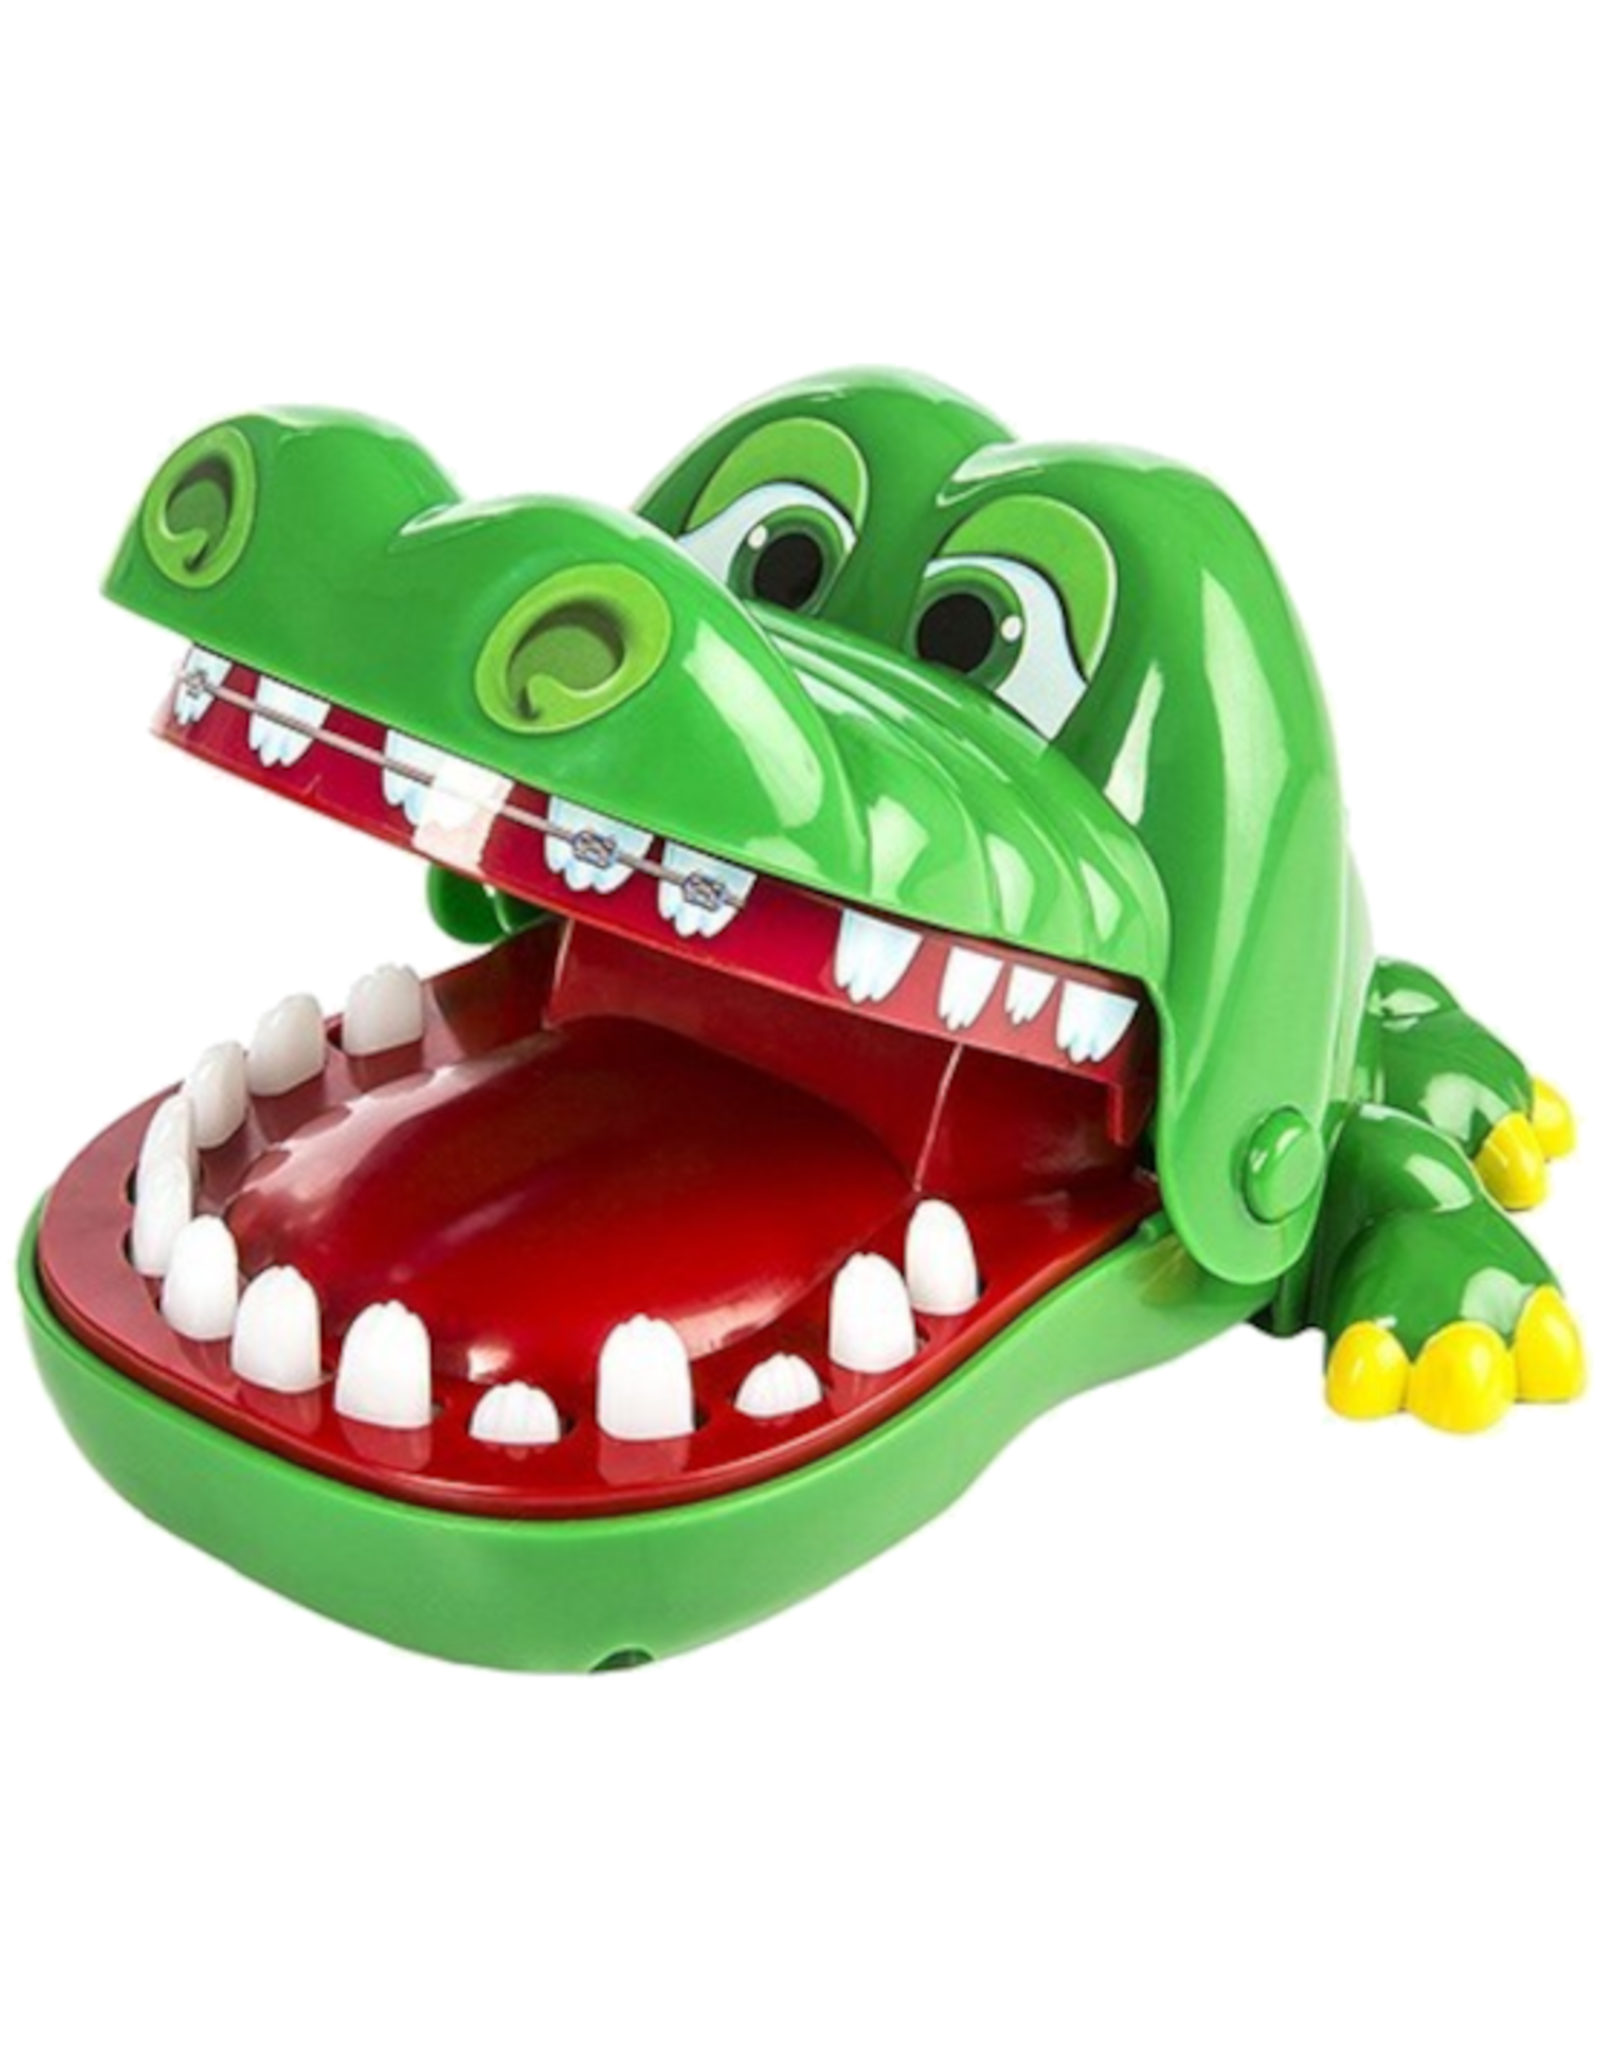 Winning Moves Games - Crocodile Dentist